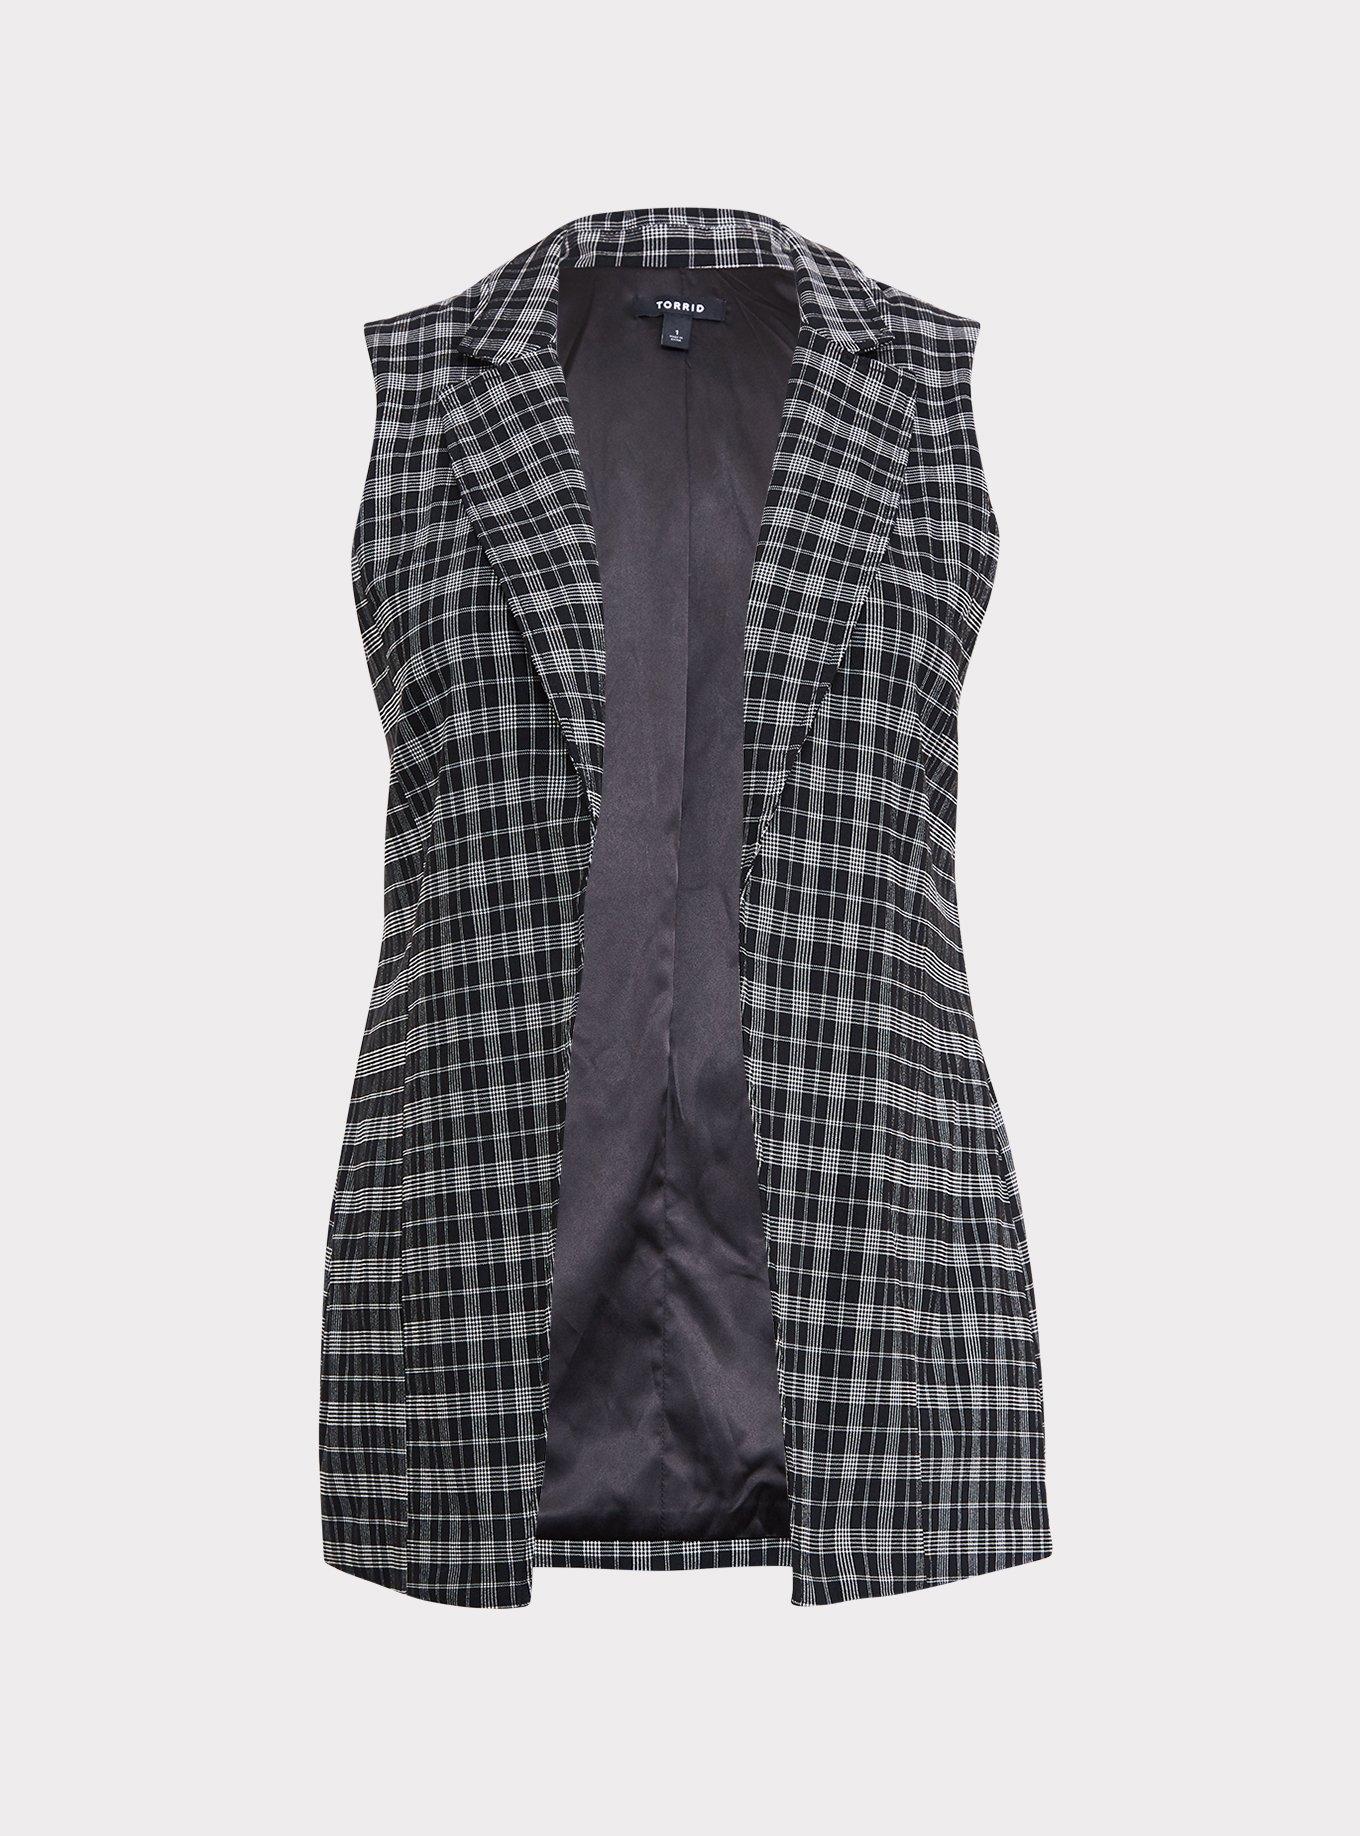 Plus Size - Black Plaid Self-Tie Cutaway Vest - Torrid